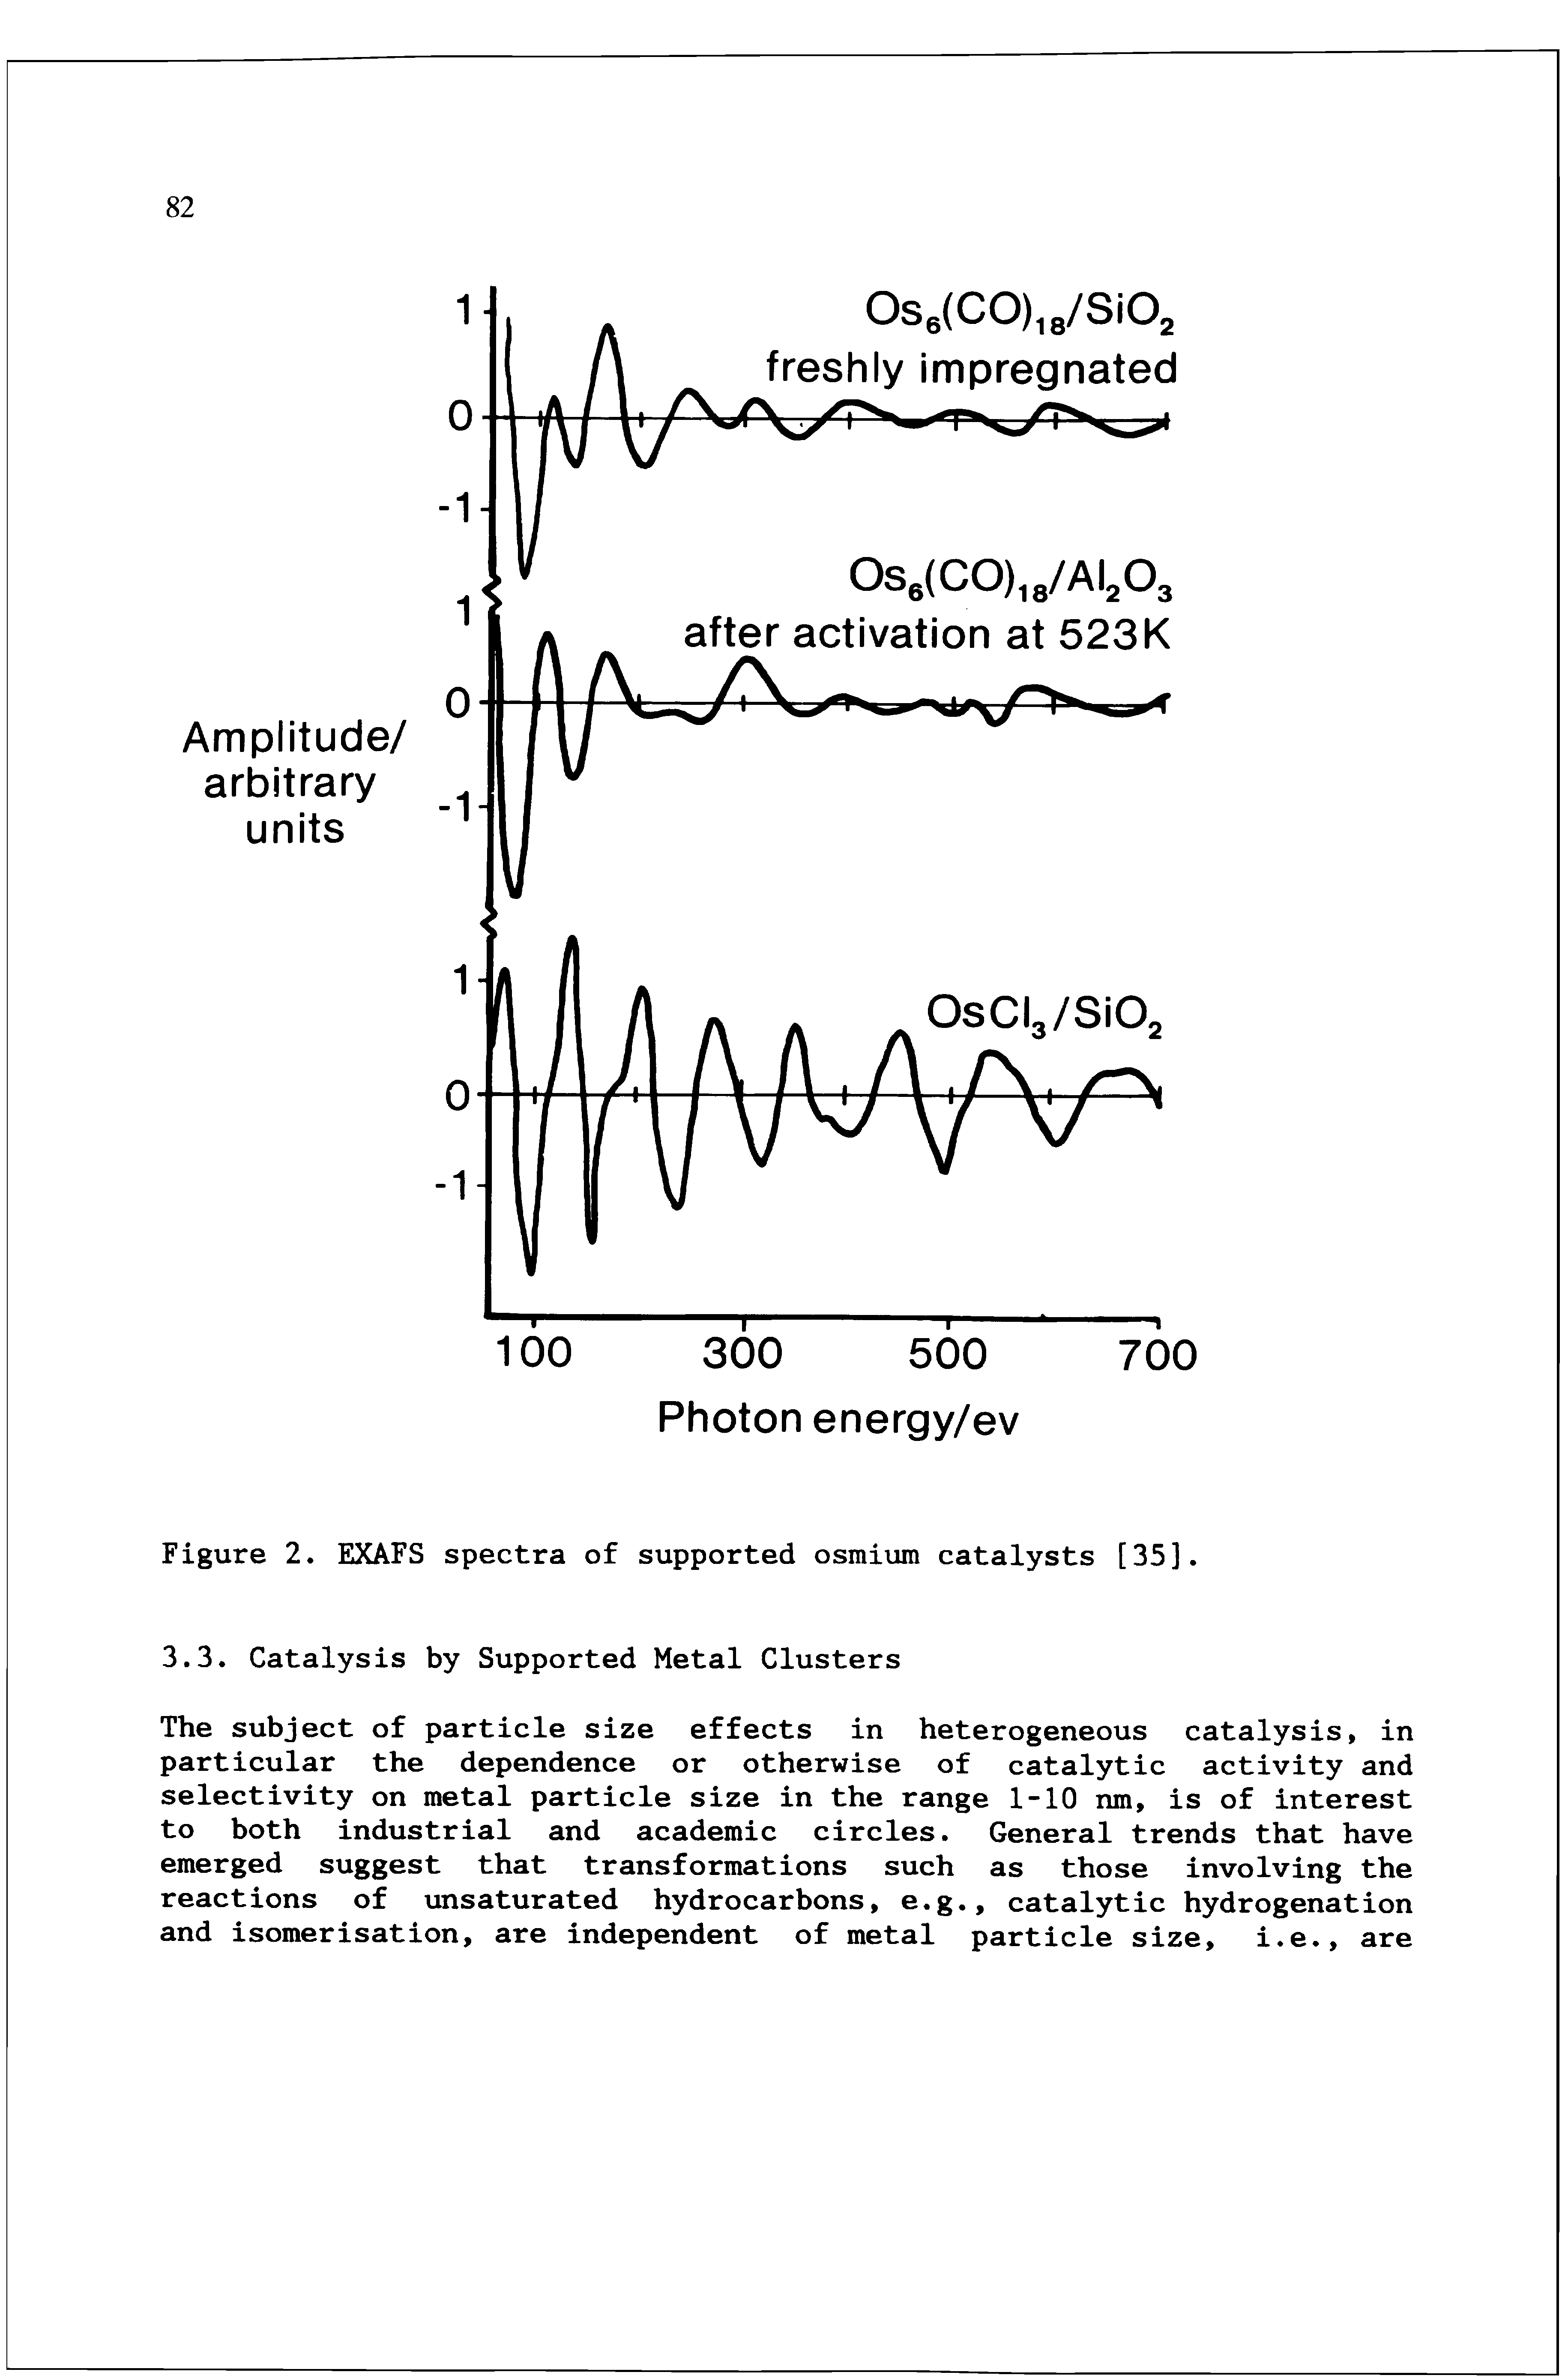 Figure 2. EXAFS spectra of supported osmium catalysts [35].